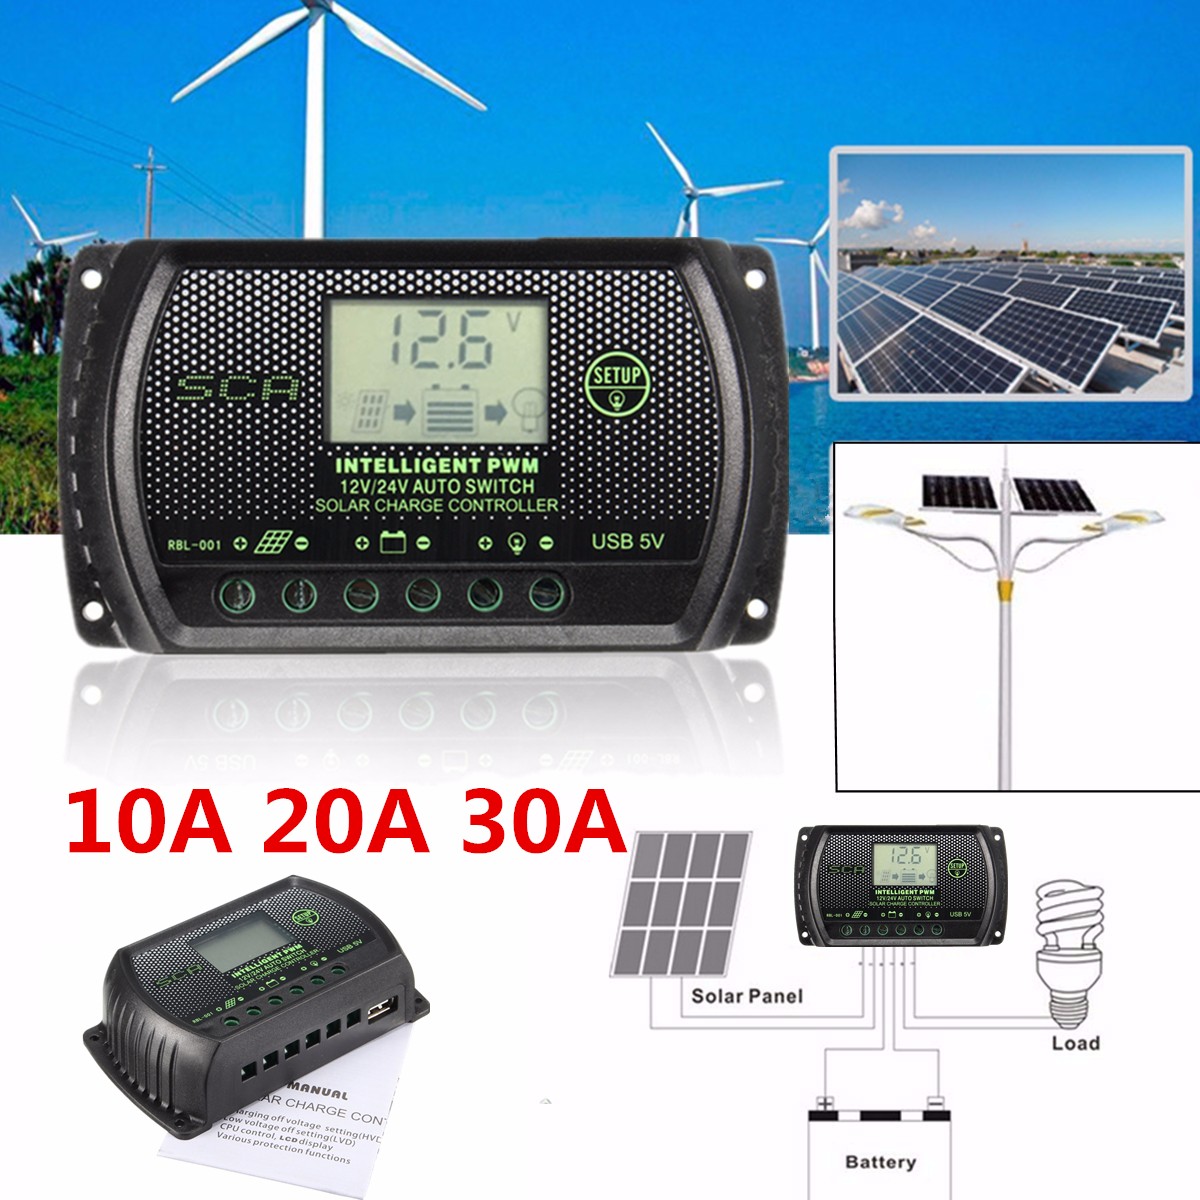 DANIU-10A-20A-30A-PWM-LCD-USB-Solar-Panel-Battery-Regulator-Charge-Controller-12V-24V-1061845-1